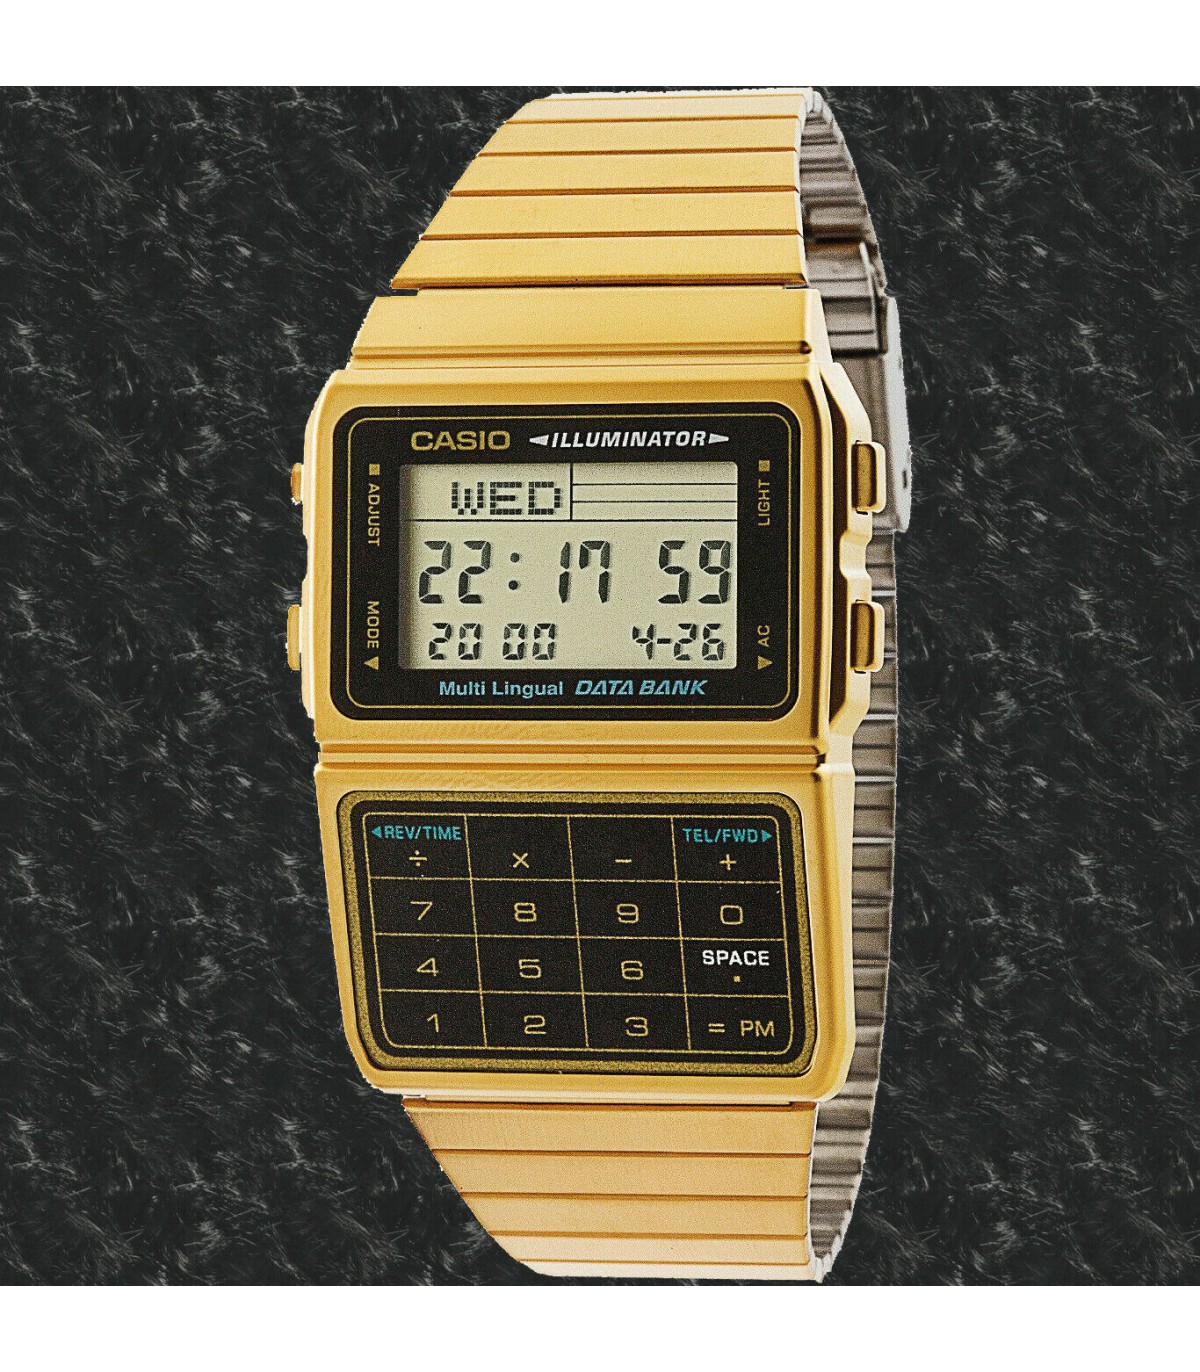 lapso Conciliador Curiosidad Reloj Casio Unisex DBC-611G-1 Iluminador dorado Telememo Calculadora